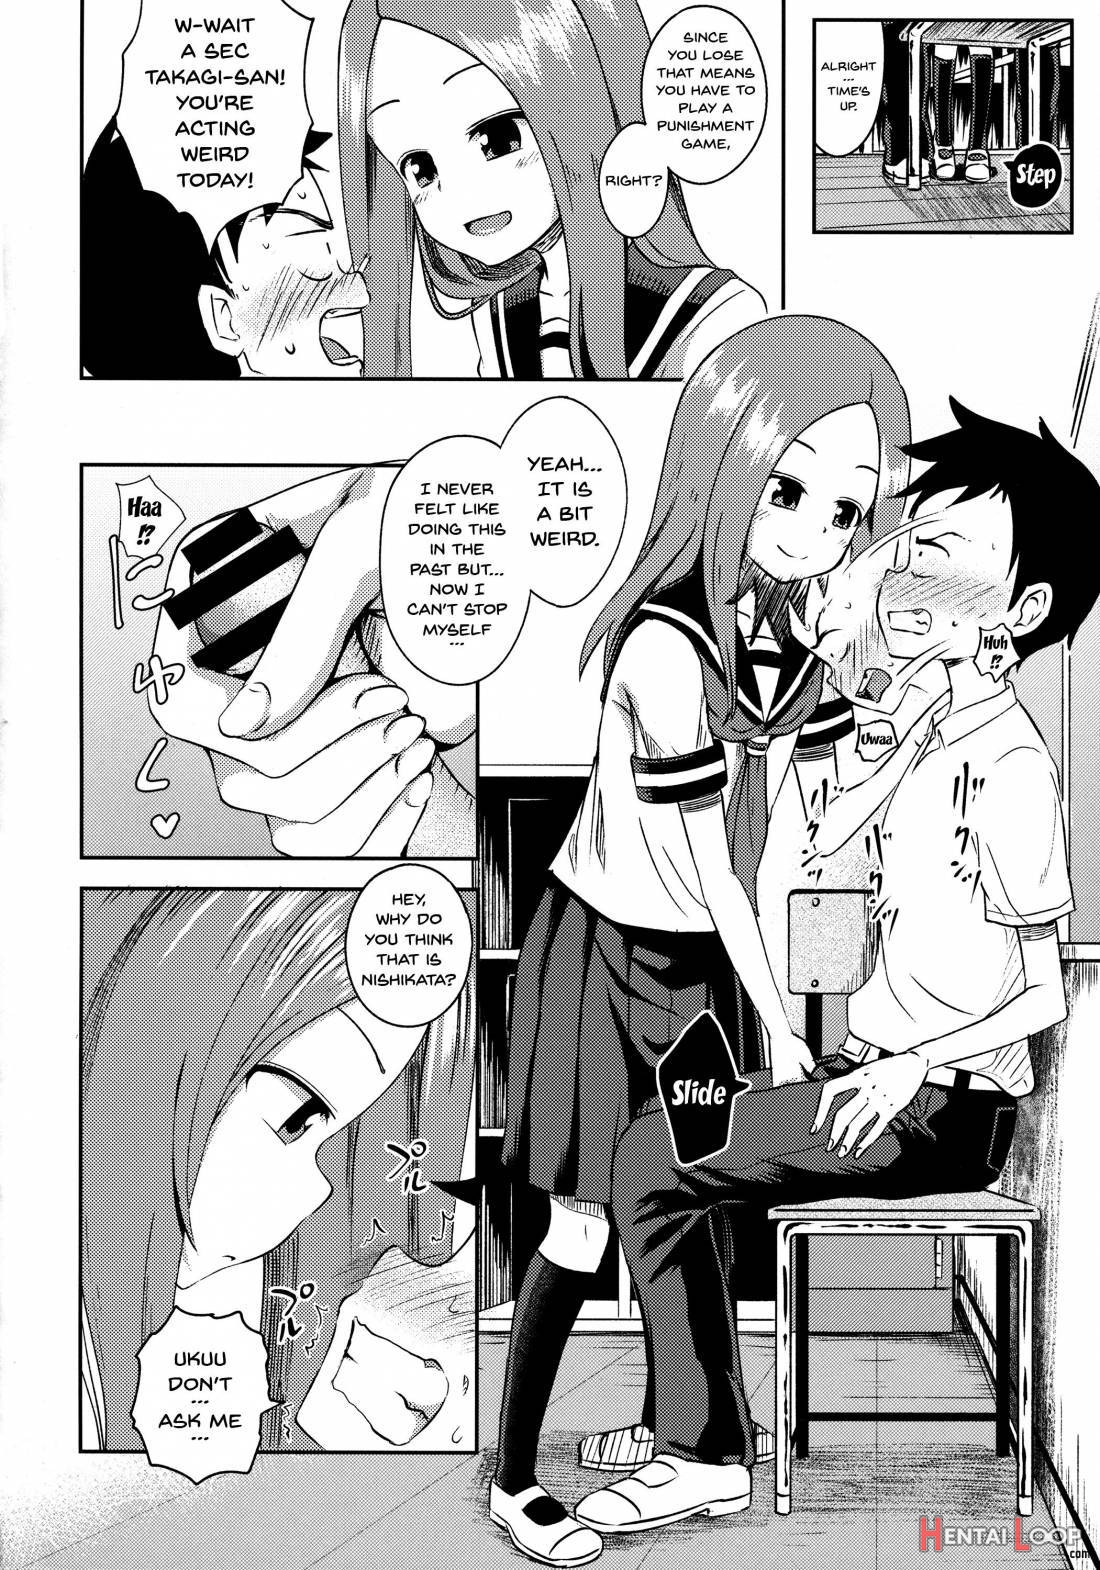 Takagi-san Escalate page 9